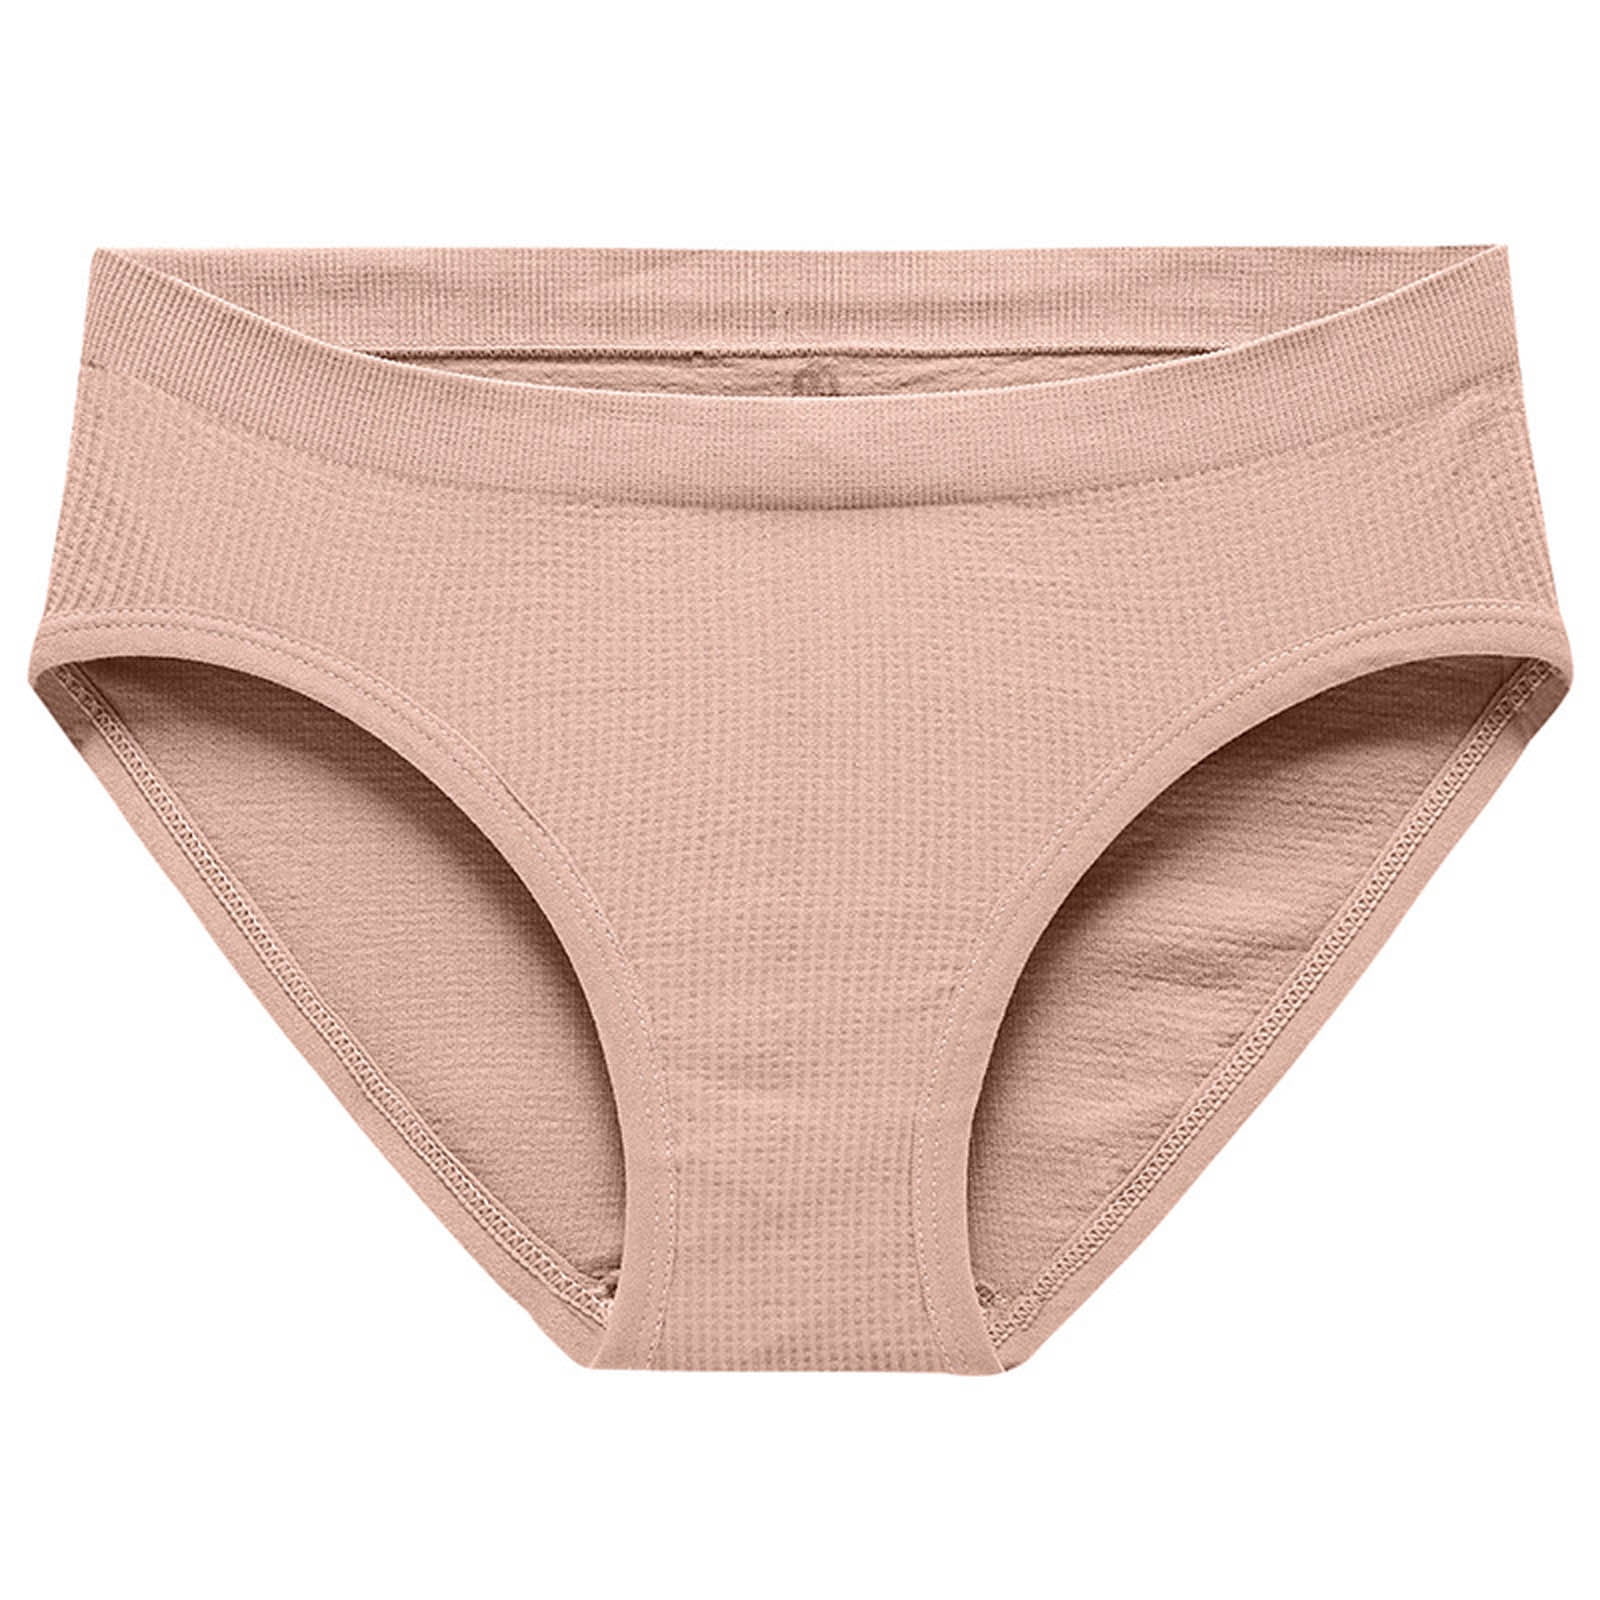 Altheanray Women's Seamless Underwear No Show Panties Soft